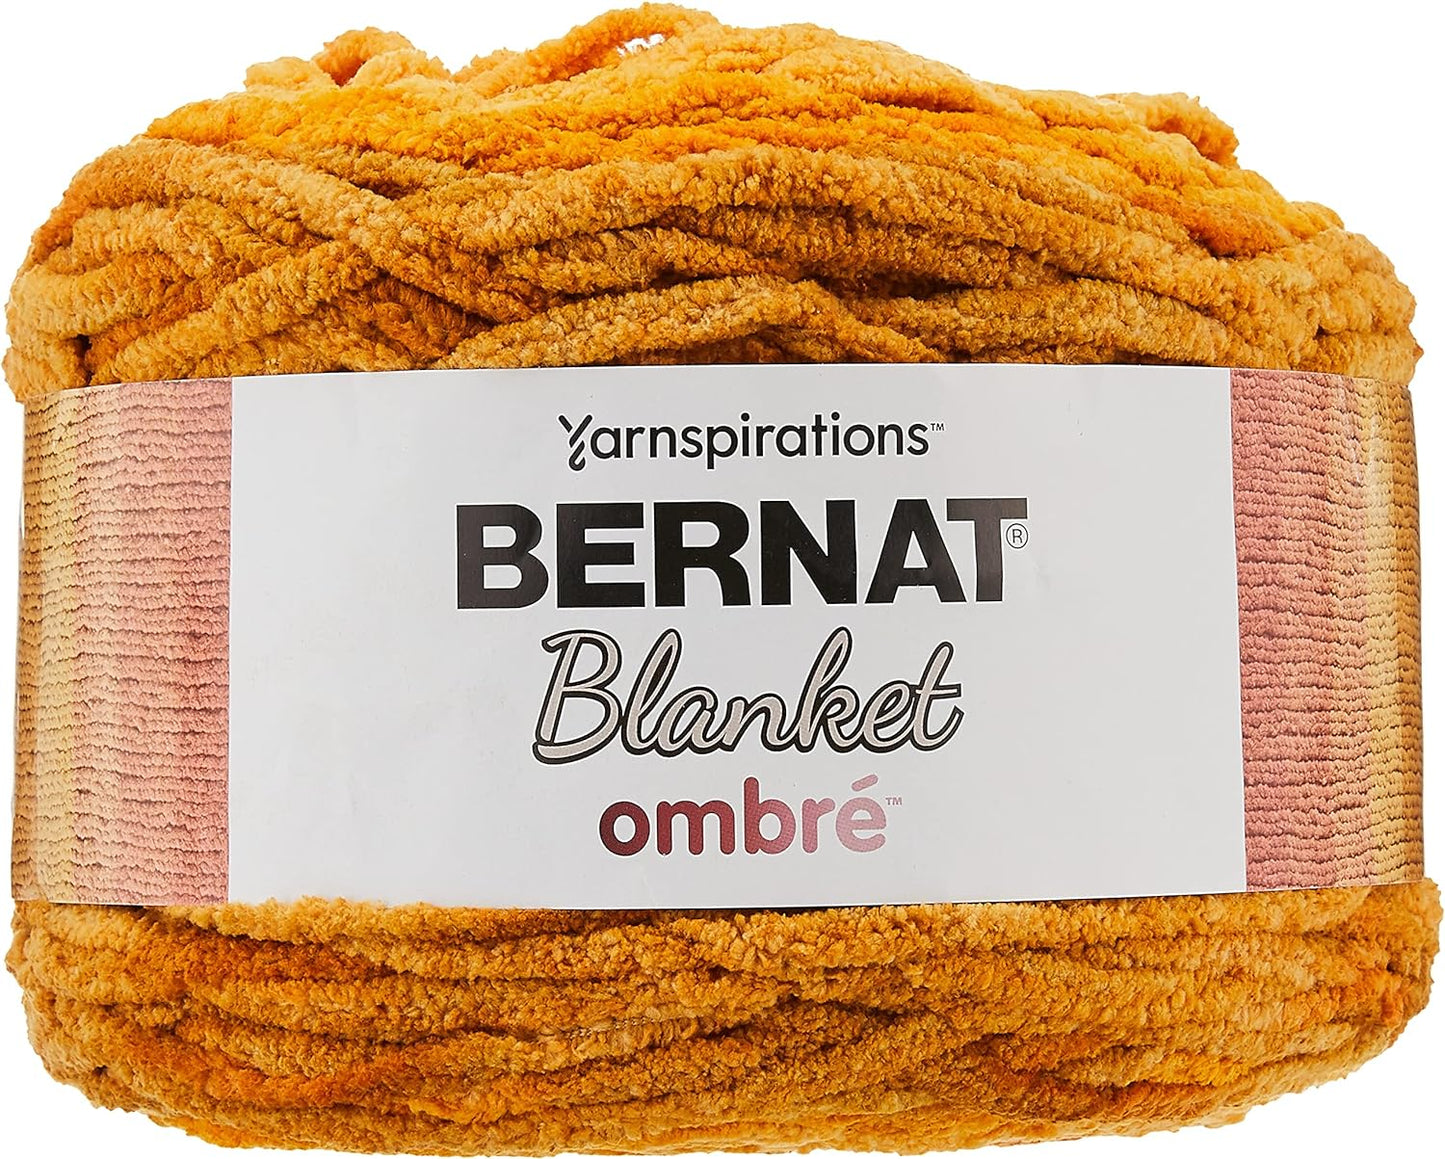 Blanket Brights Red White & Boom Yarn - 2 Pack of 300G/10.5Oz - Polyester - 6 Super Bulky - 220 Yards - Knitting/Crochet